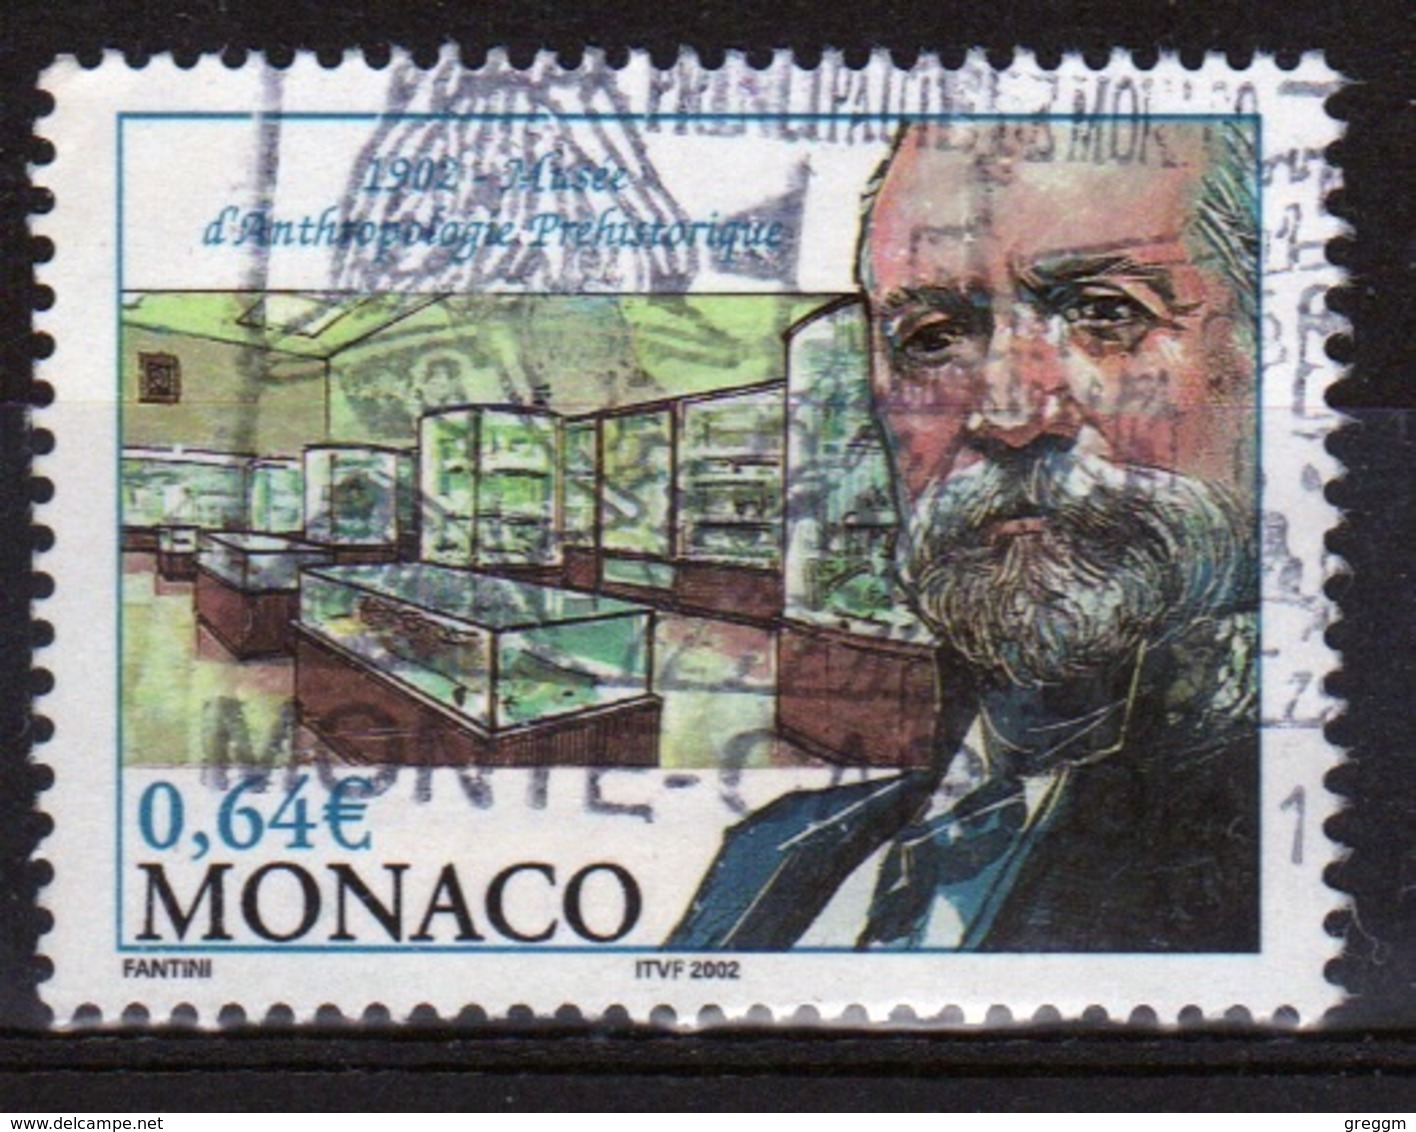 Monaco Single 64c Stamp From 2002 Set To Celebrate Anniversaries. - Oblitérés